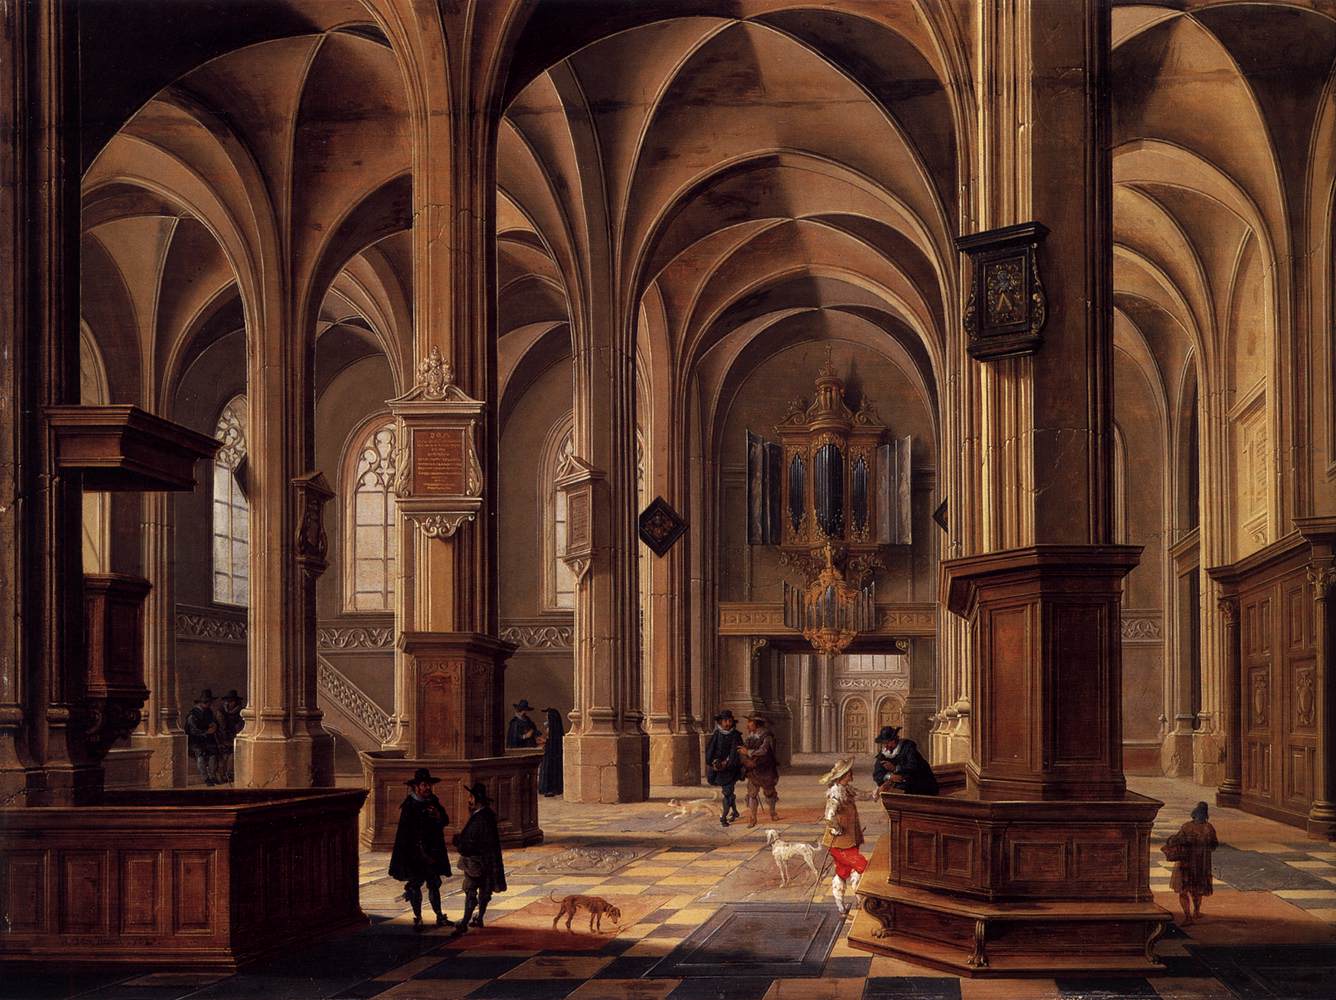 Interior of the Cunerakerk, Rhenen